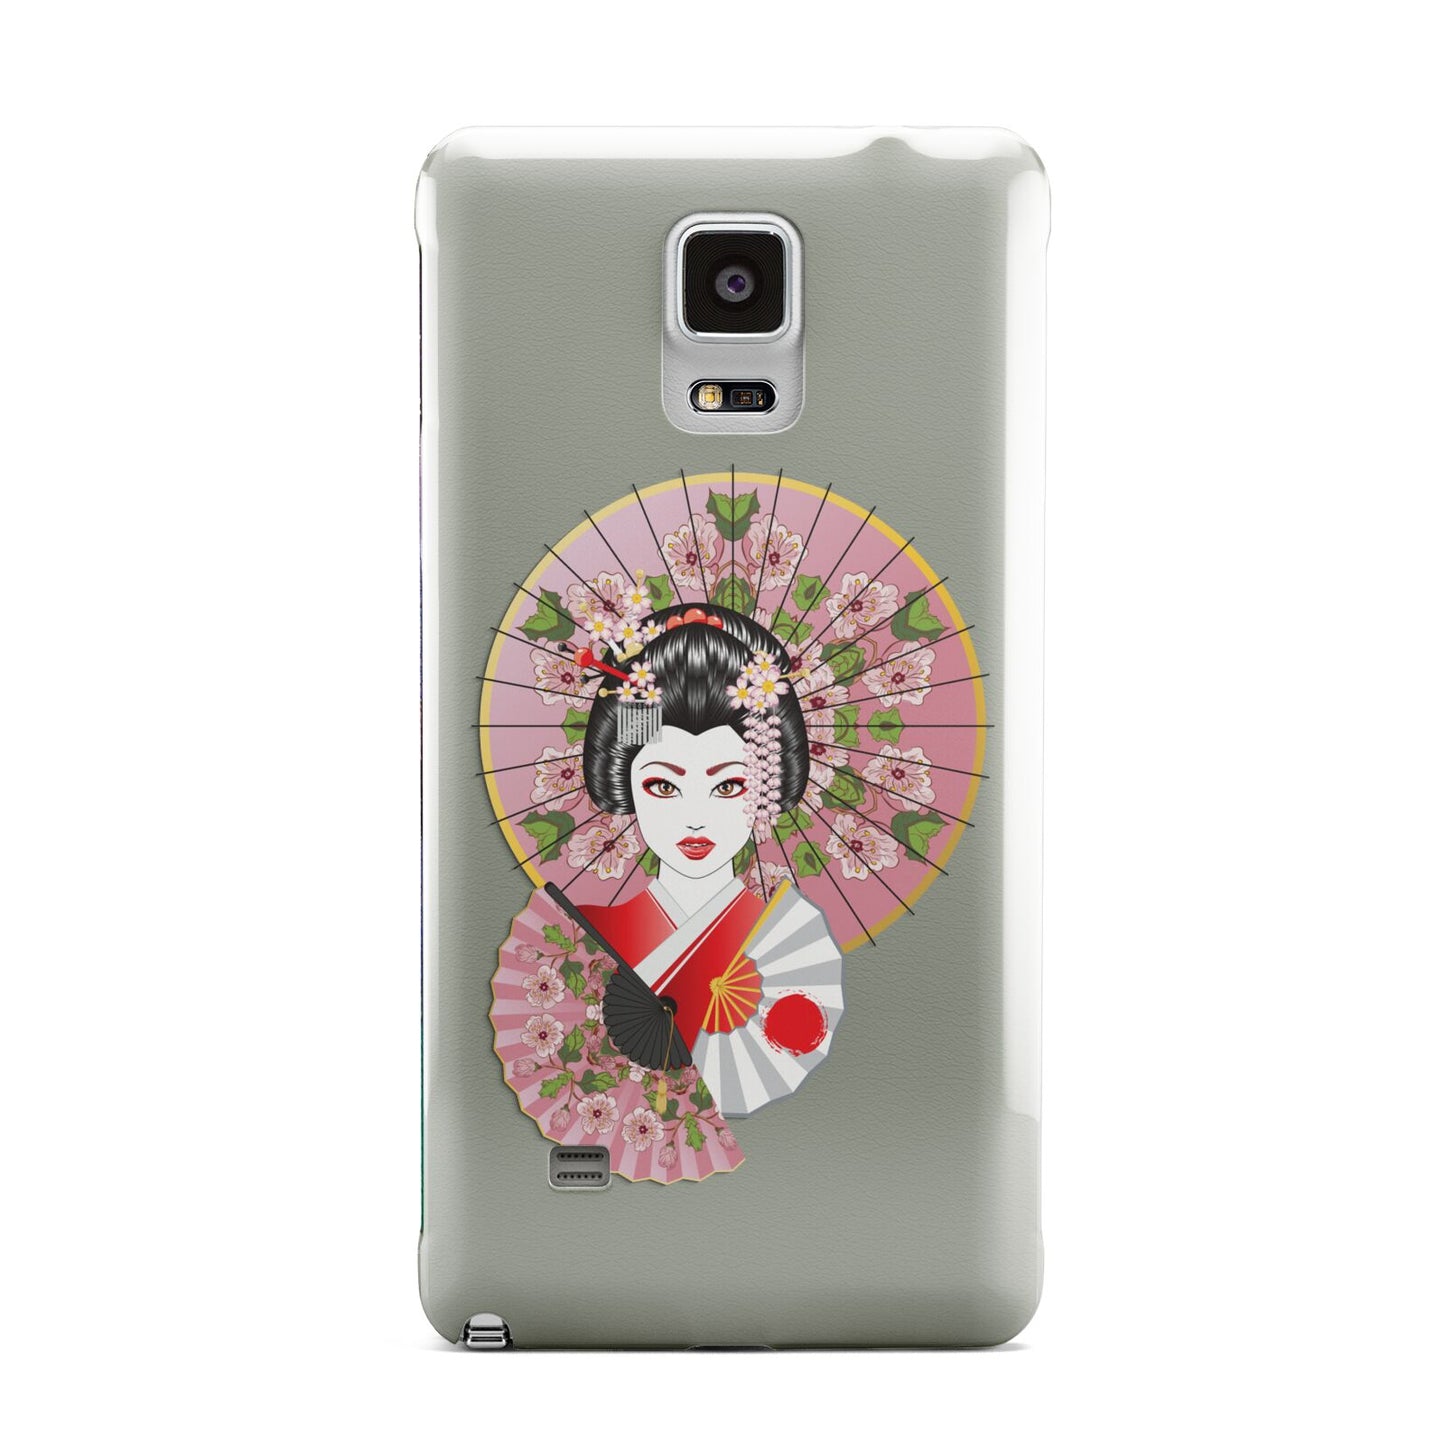 Geisha Girl Samsung Galaxy Note 4 Case